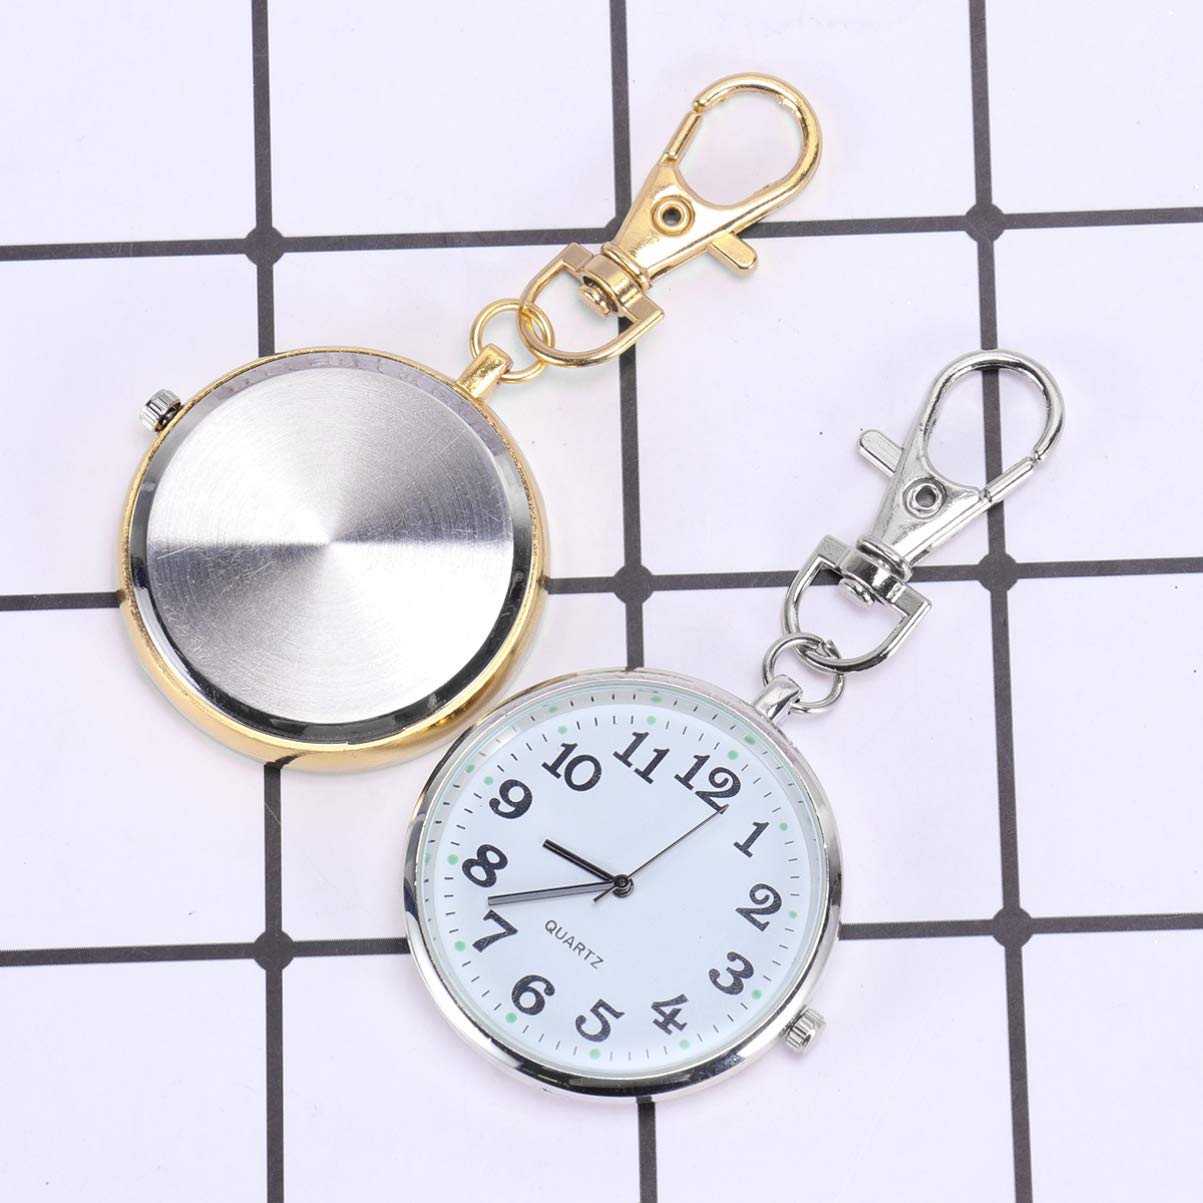 NICERIO 2pcs, Nurse Pocket Watch Keychain - Vintage Round Classical Pocket Key Chain Watch Pendant Pocket Watch for Nurse Doctor